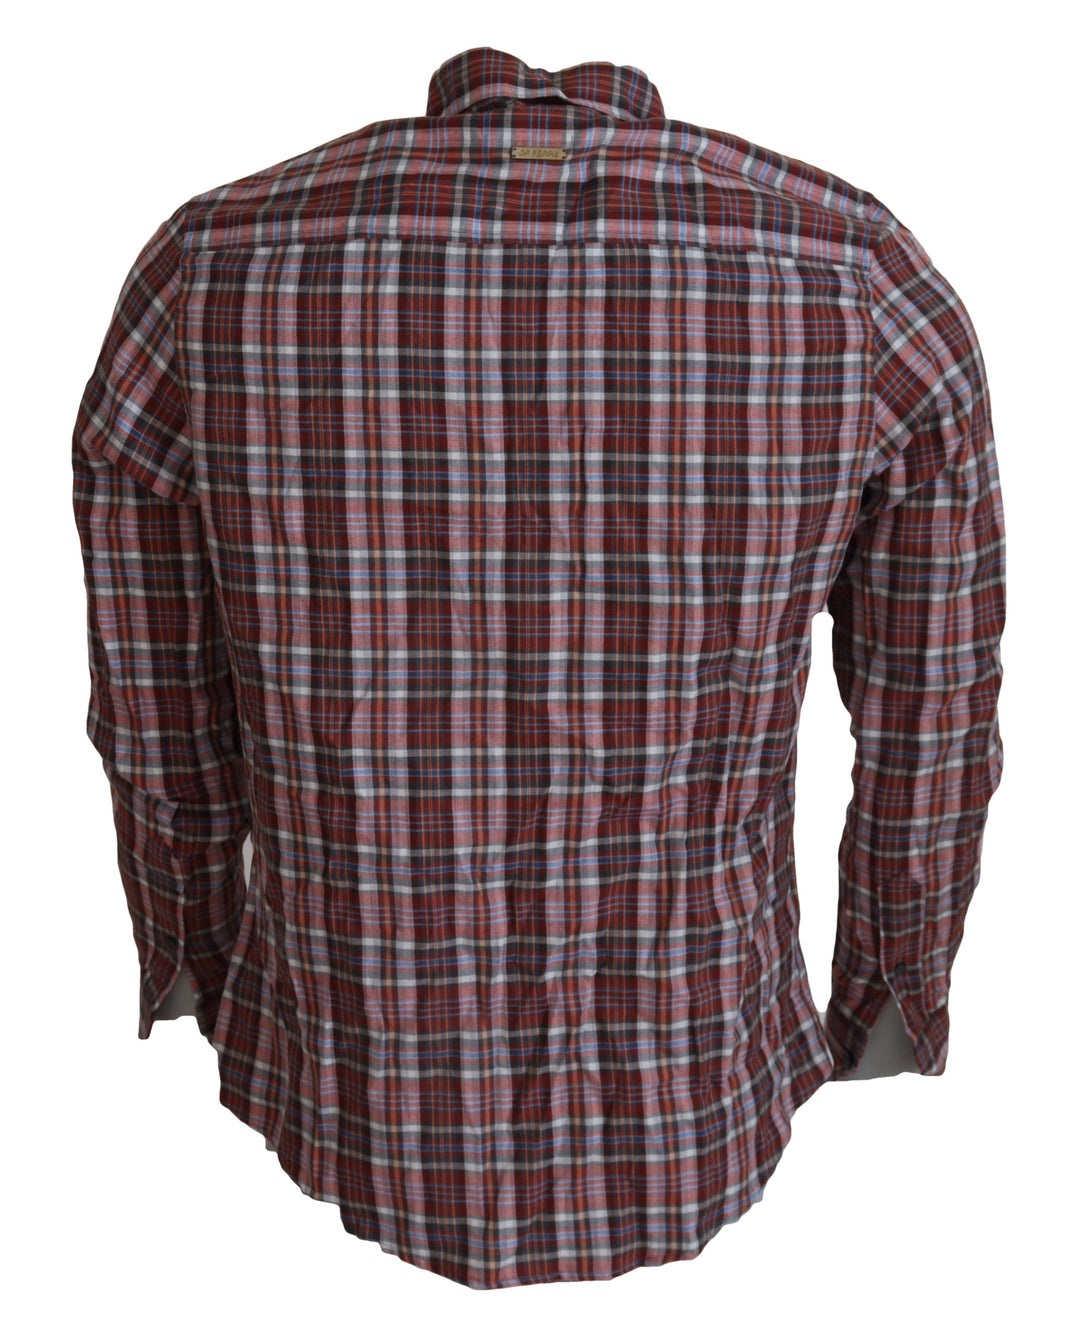 GF Ferre Multicolor Cotton Casual Men's Shirt